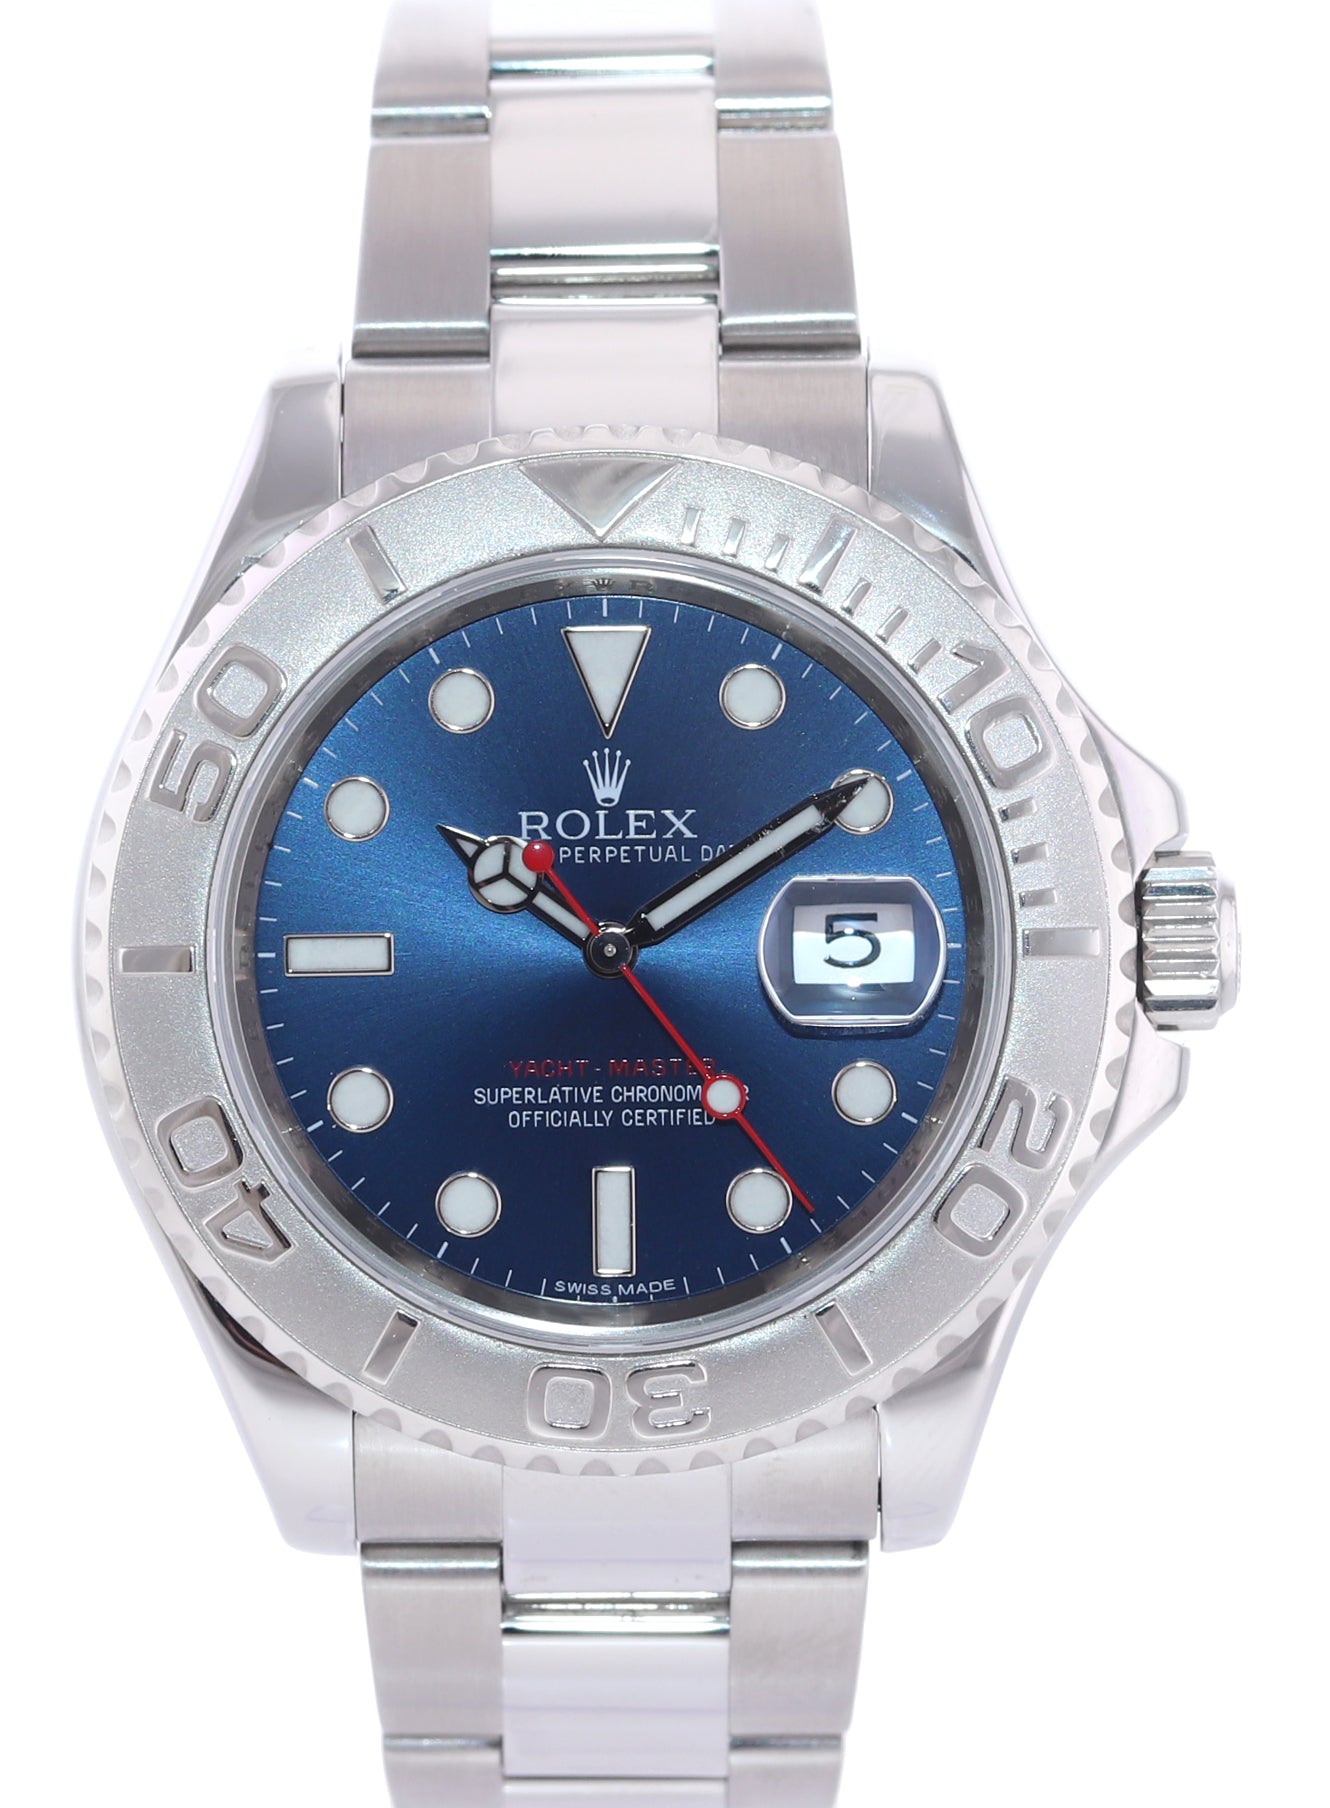 2017 Random Serial Rolex Yacht-Master 116622 Steel Platinum Blue 40mm Watch Box